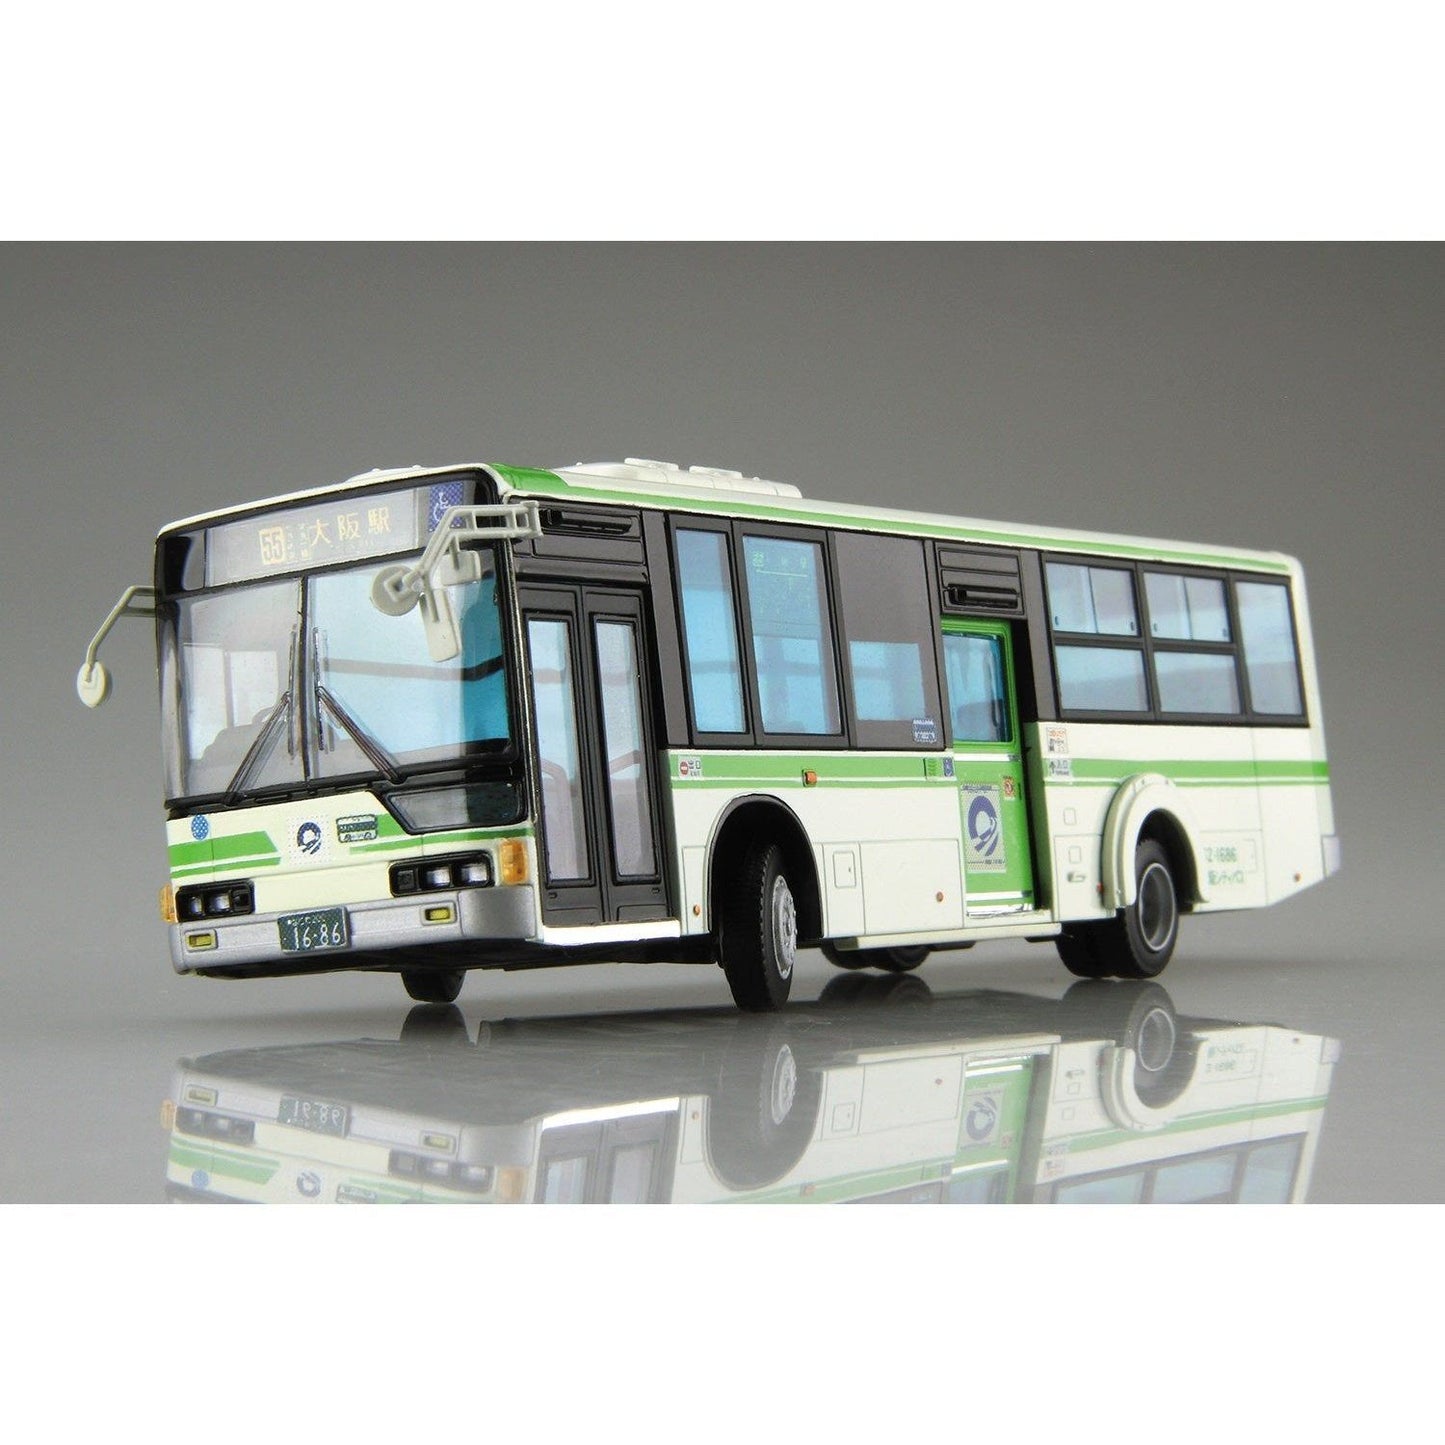 Aoshima 1/80 Working Vehicle 02 三菱.扶桑汽車 MP-37航空之星巴士/大阪市巴士用車 組裝模型 - TwinnerModel